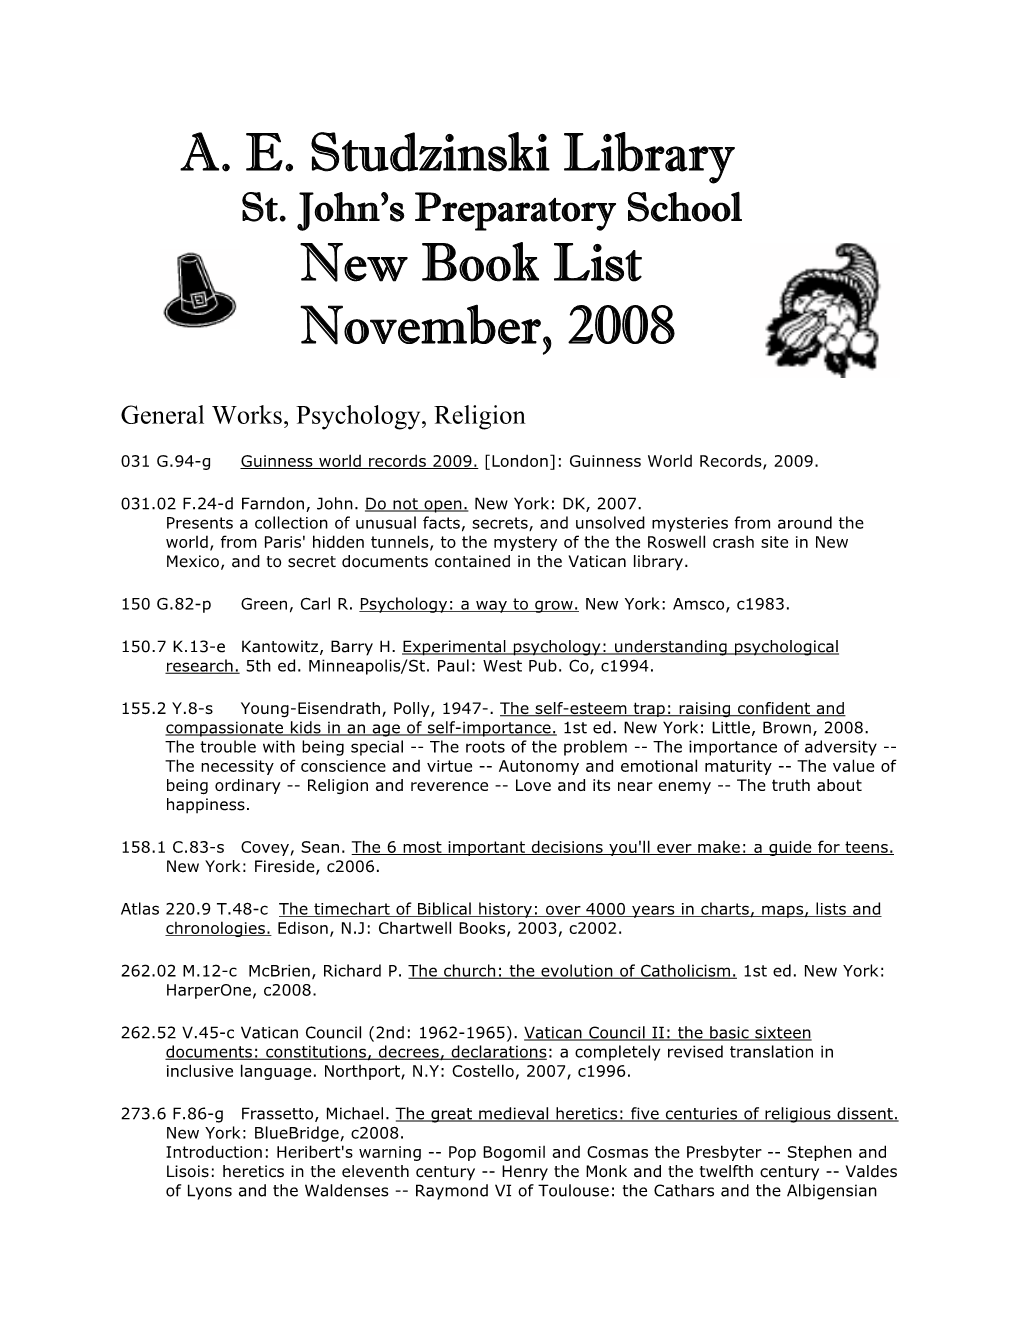 A. E. Studzinski Library New Book List November, 2008